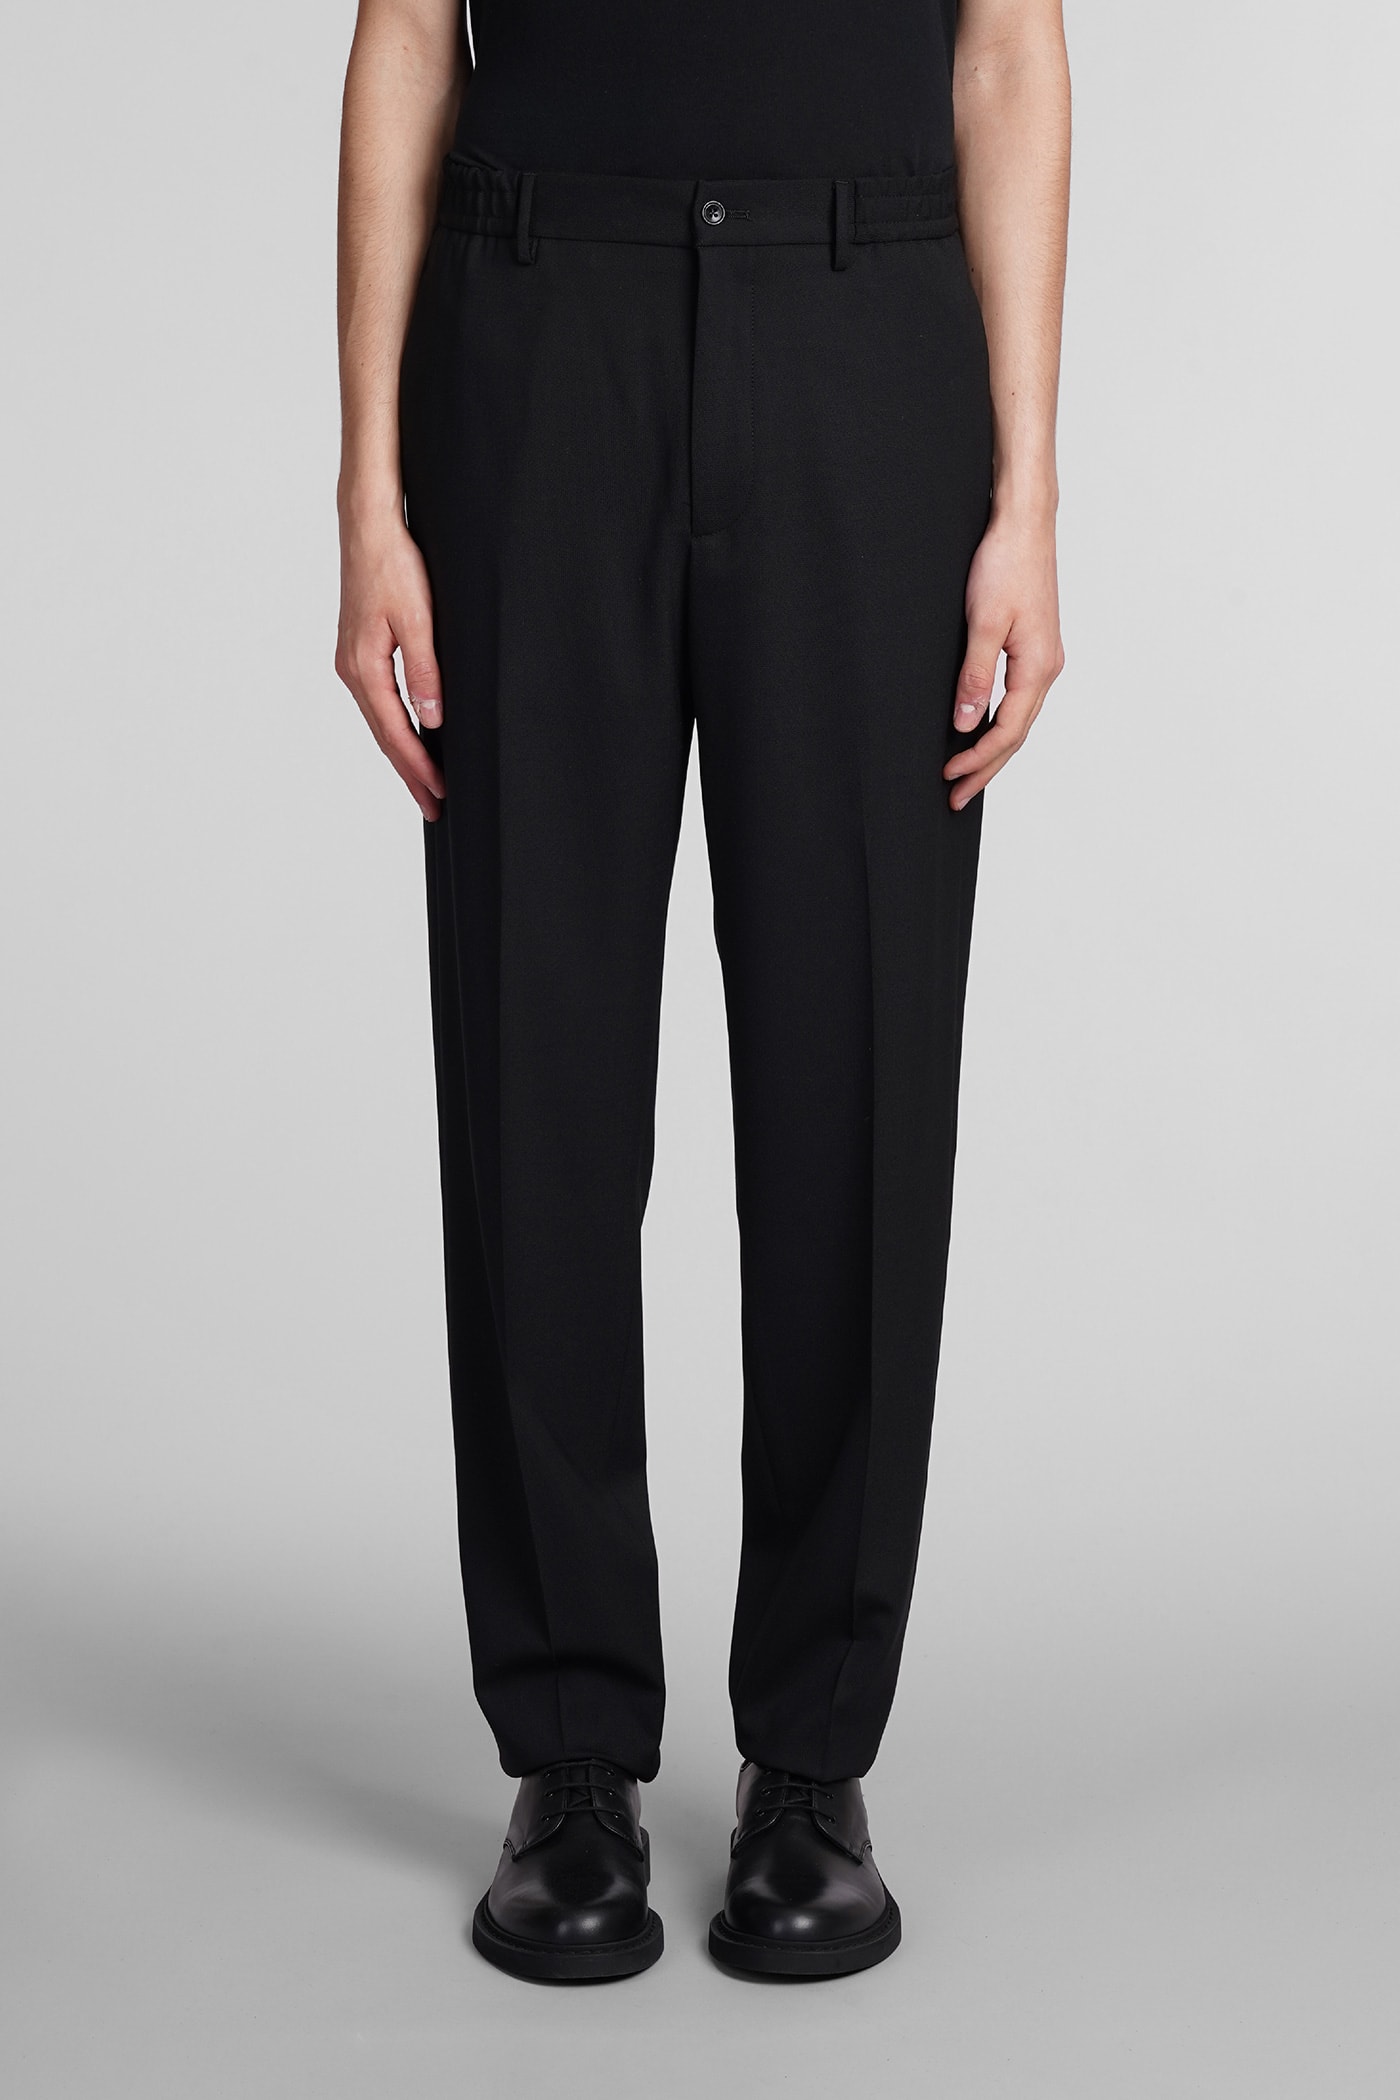 0205 P-garcon Pants In Black Polyester